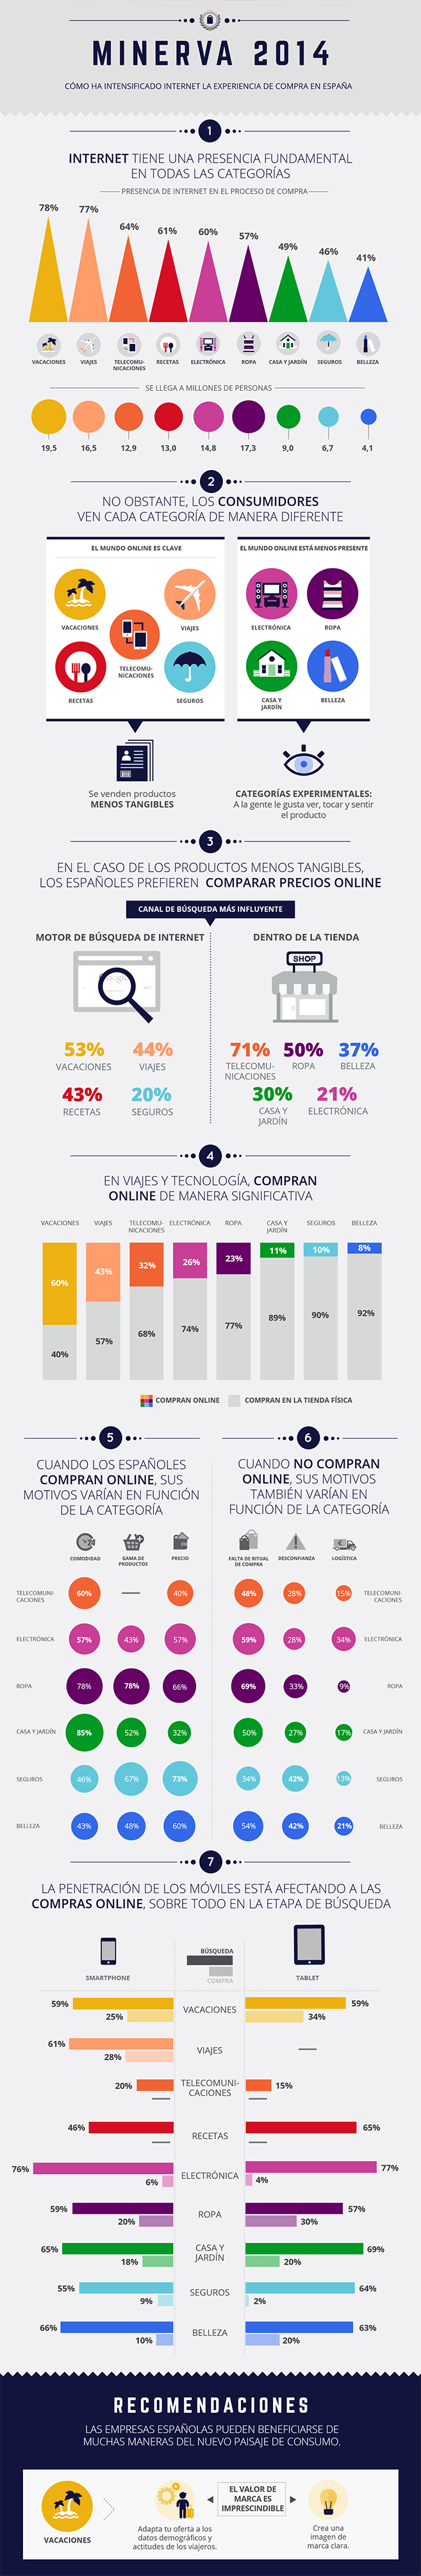 Infografia-e-commerce-consumo-espana